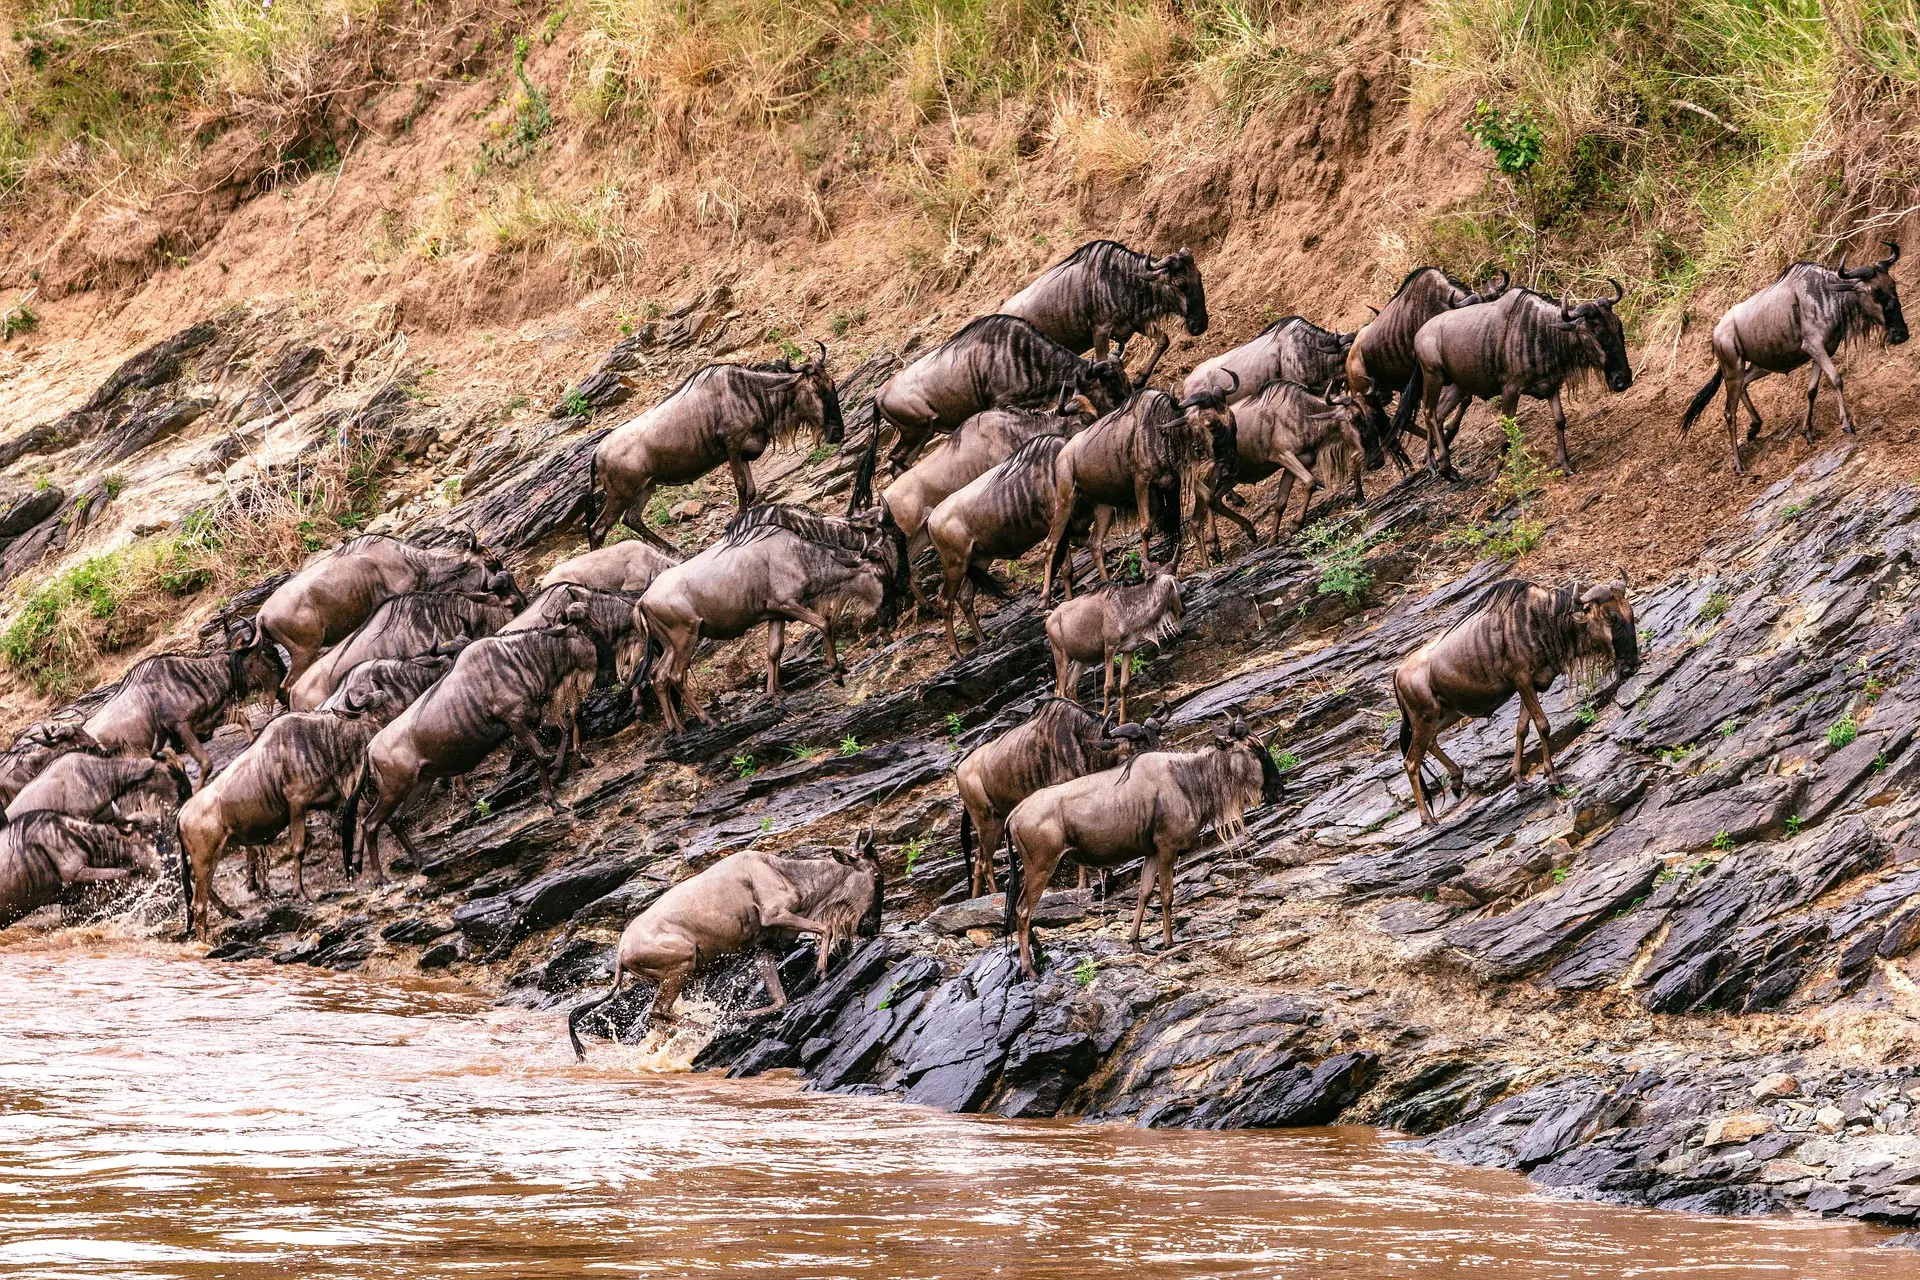 Wildebeests great migration at Masai Mara